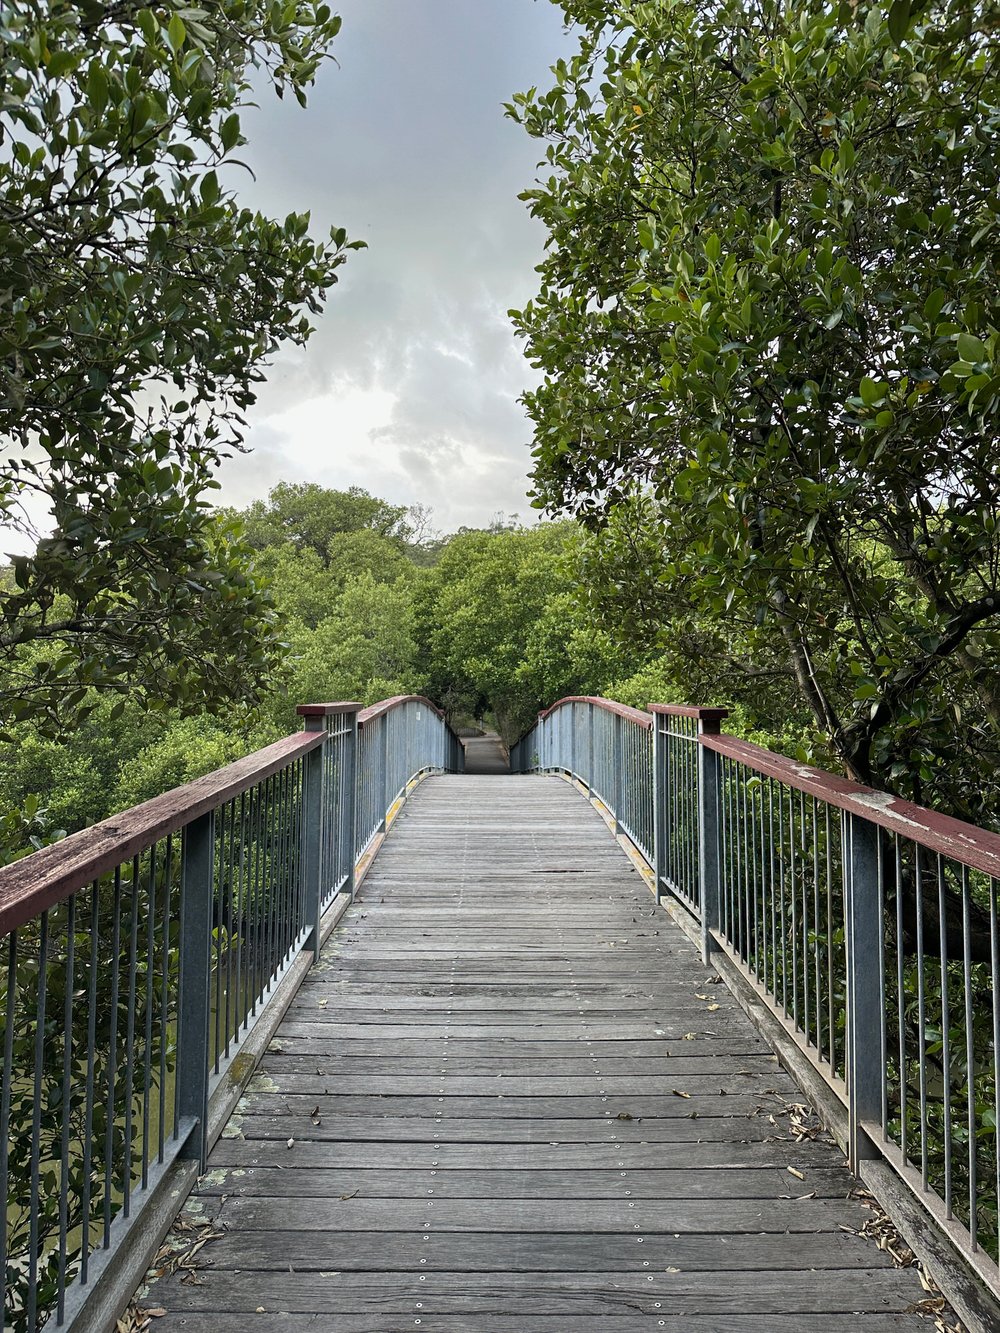 Cross this bridge to begin the walk